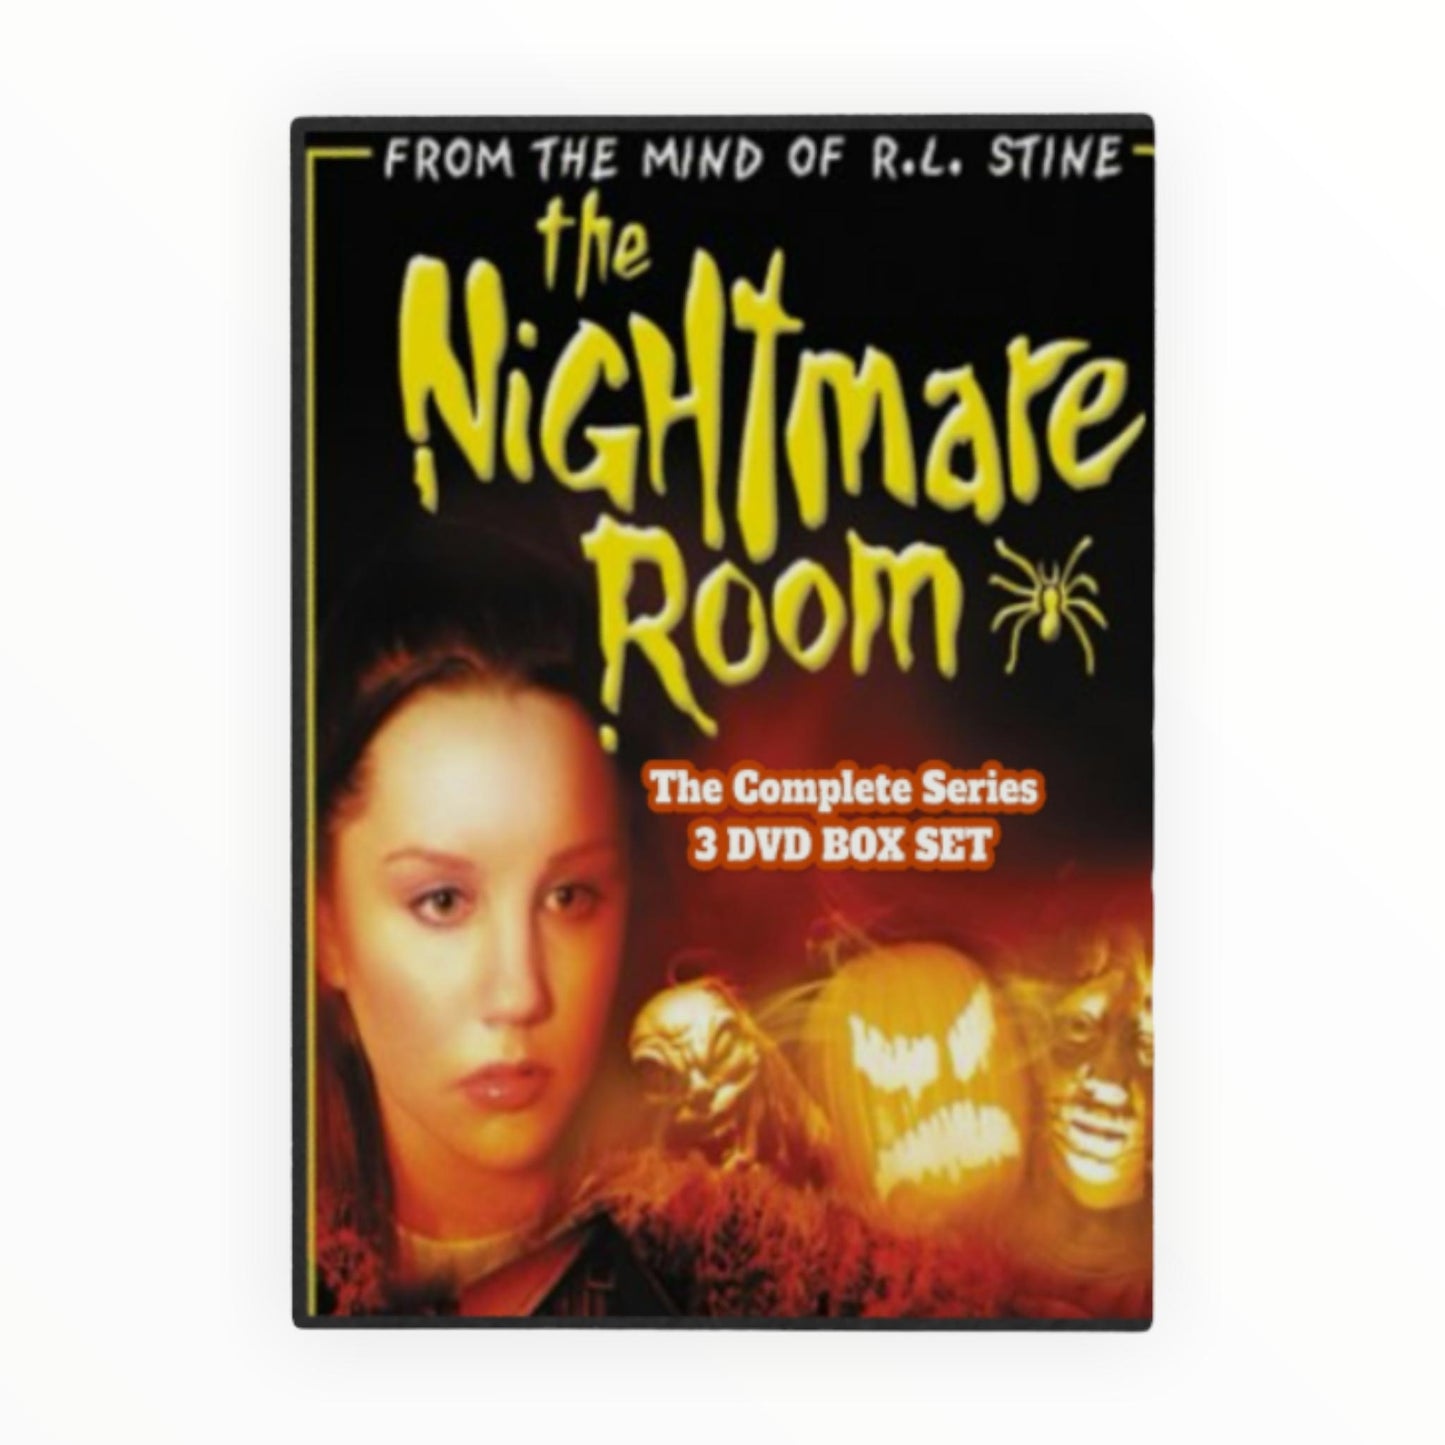 R.L Stine The Nightmare Room Complete Series (3 DVD Box Set)